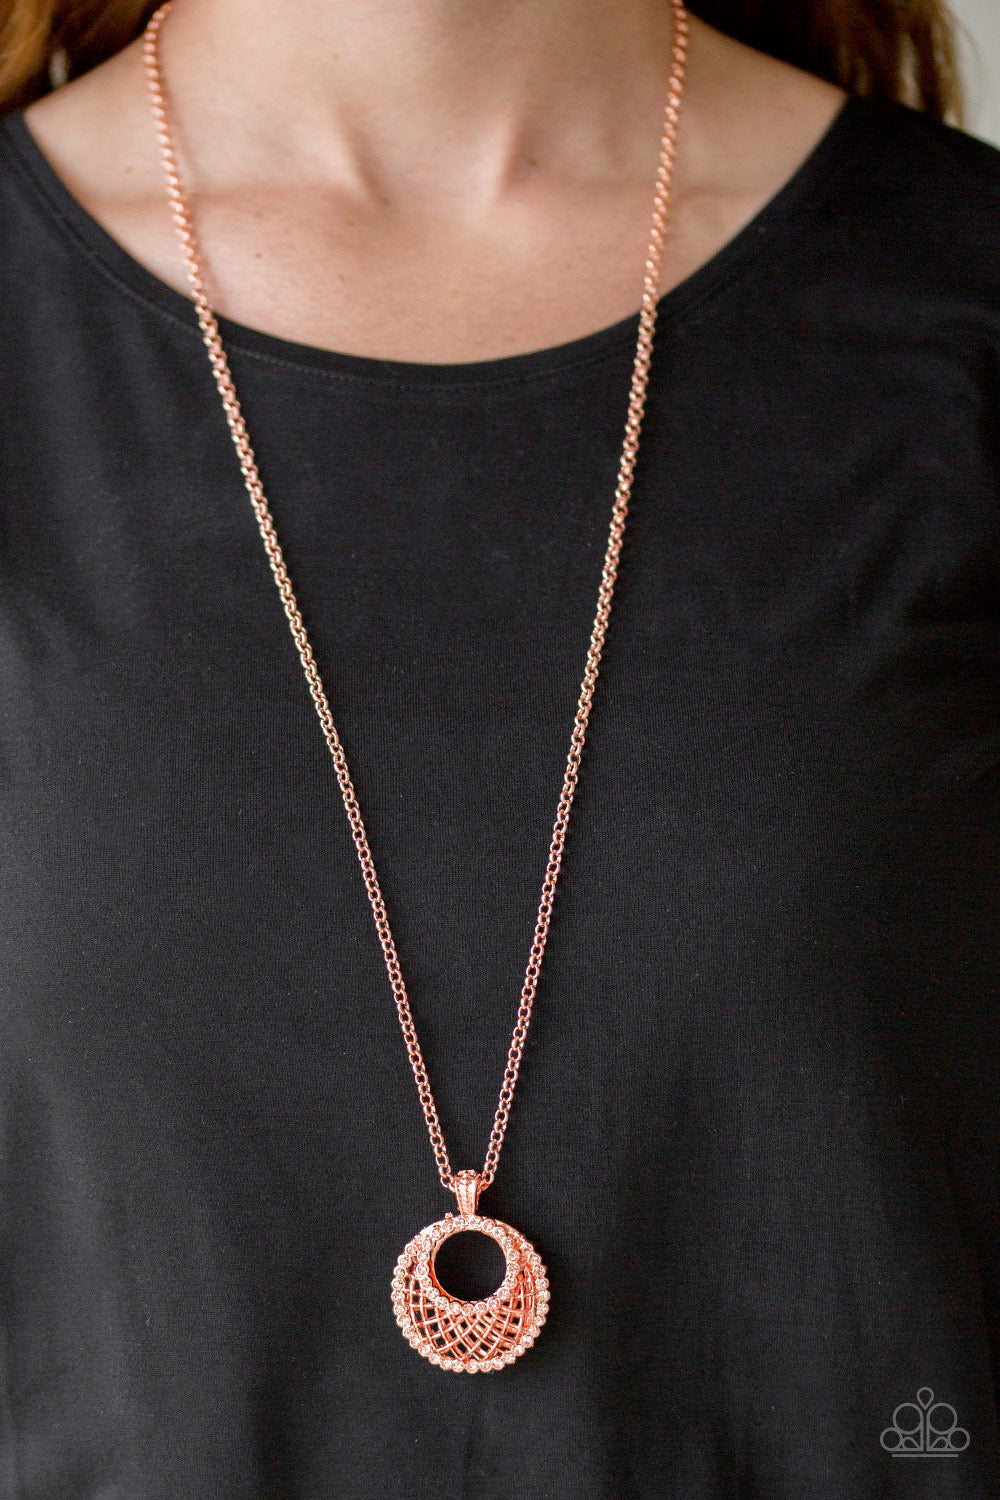 Net Worth - copper - Paparazzi necklace